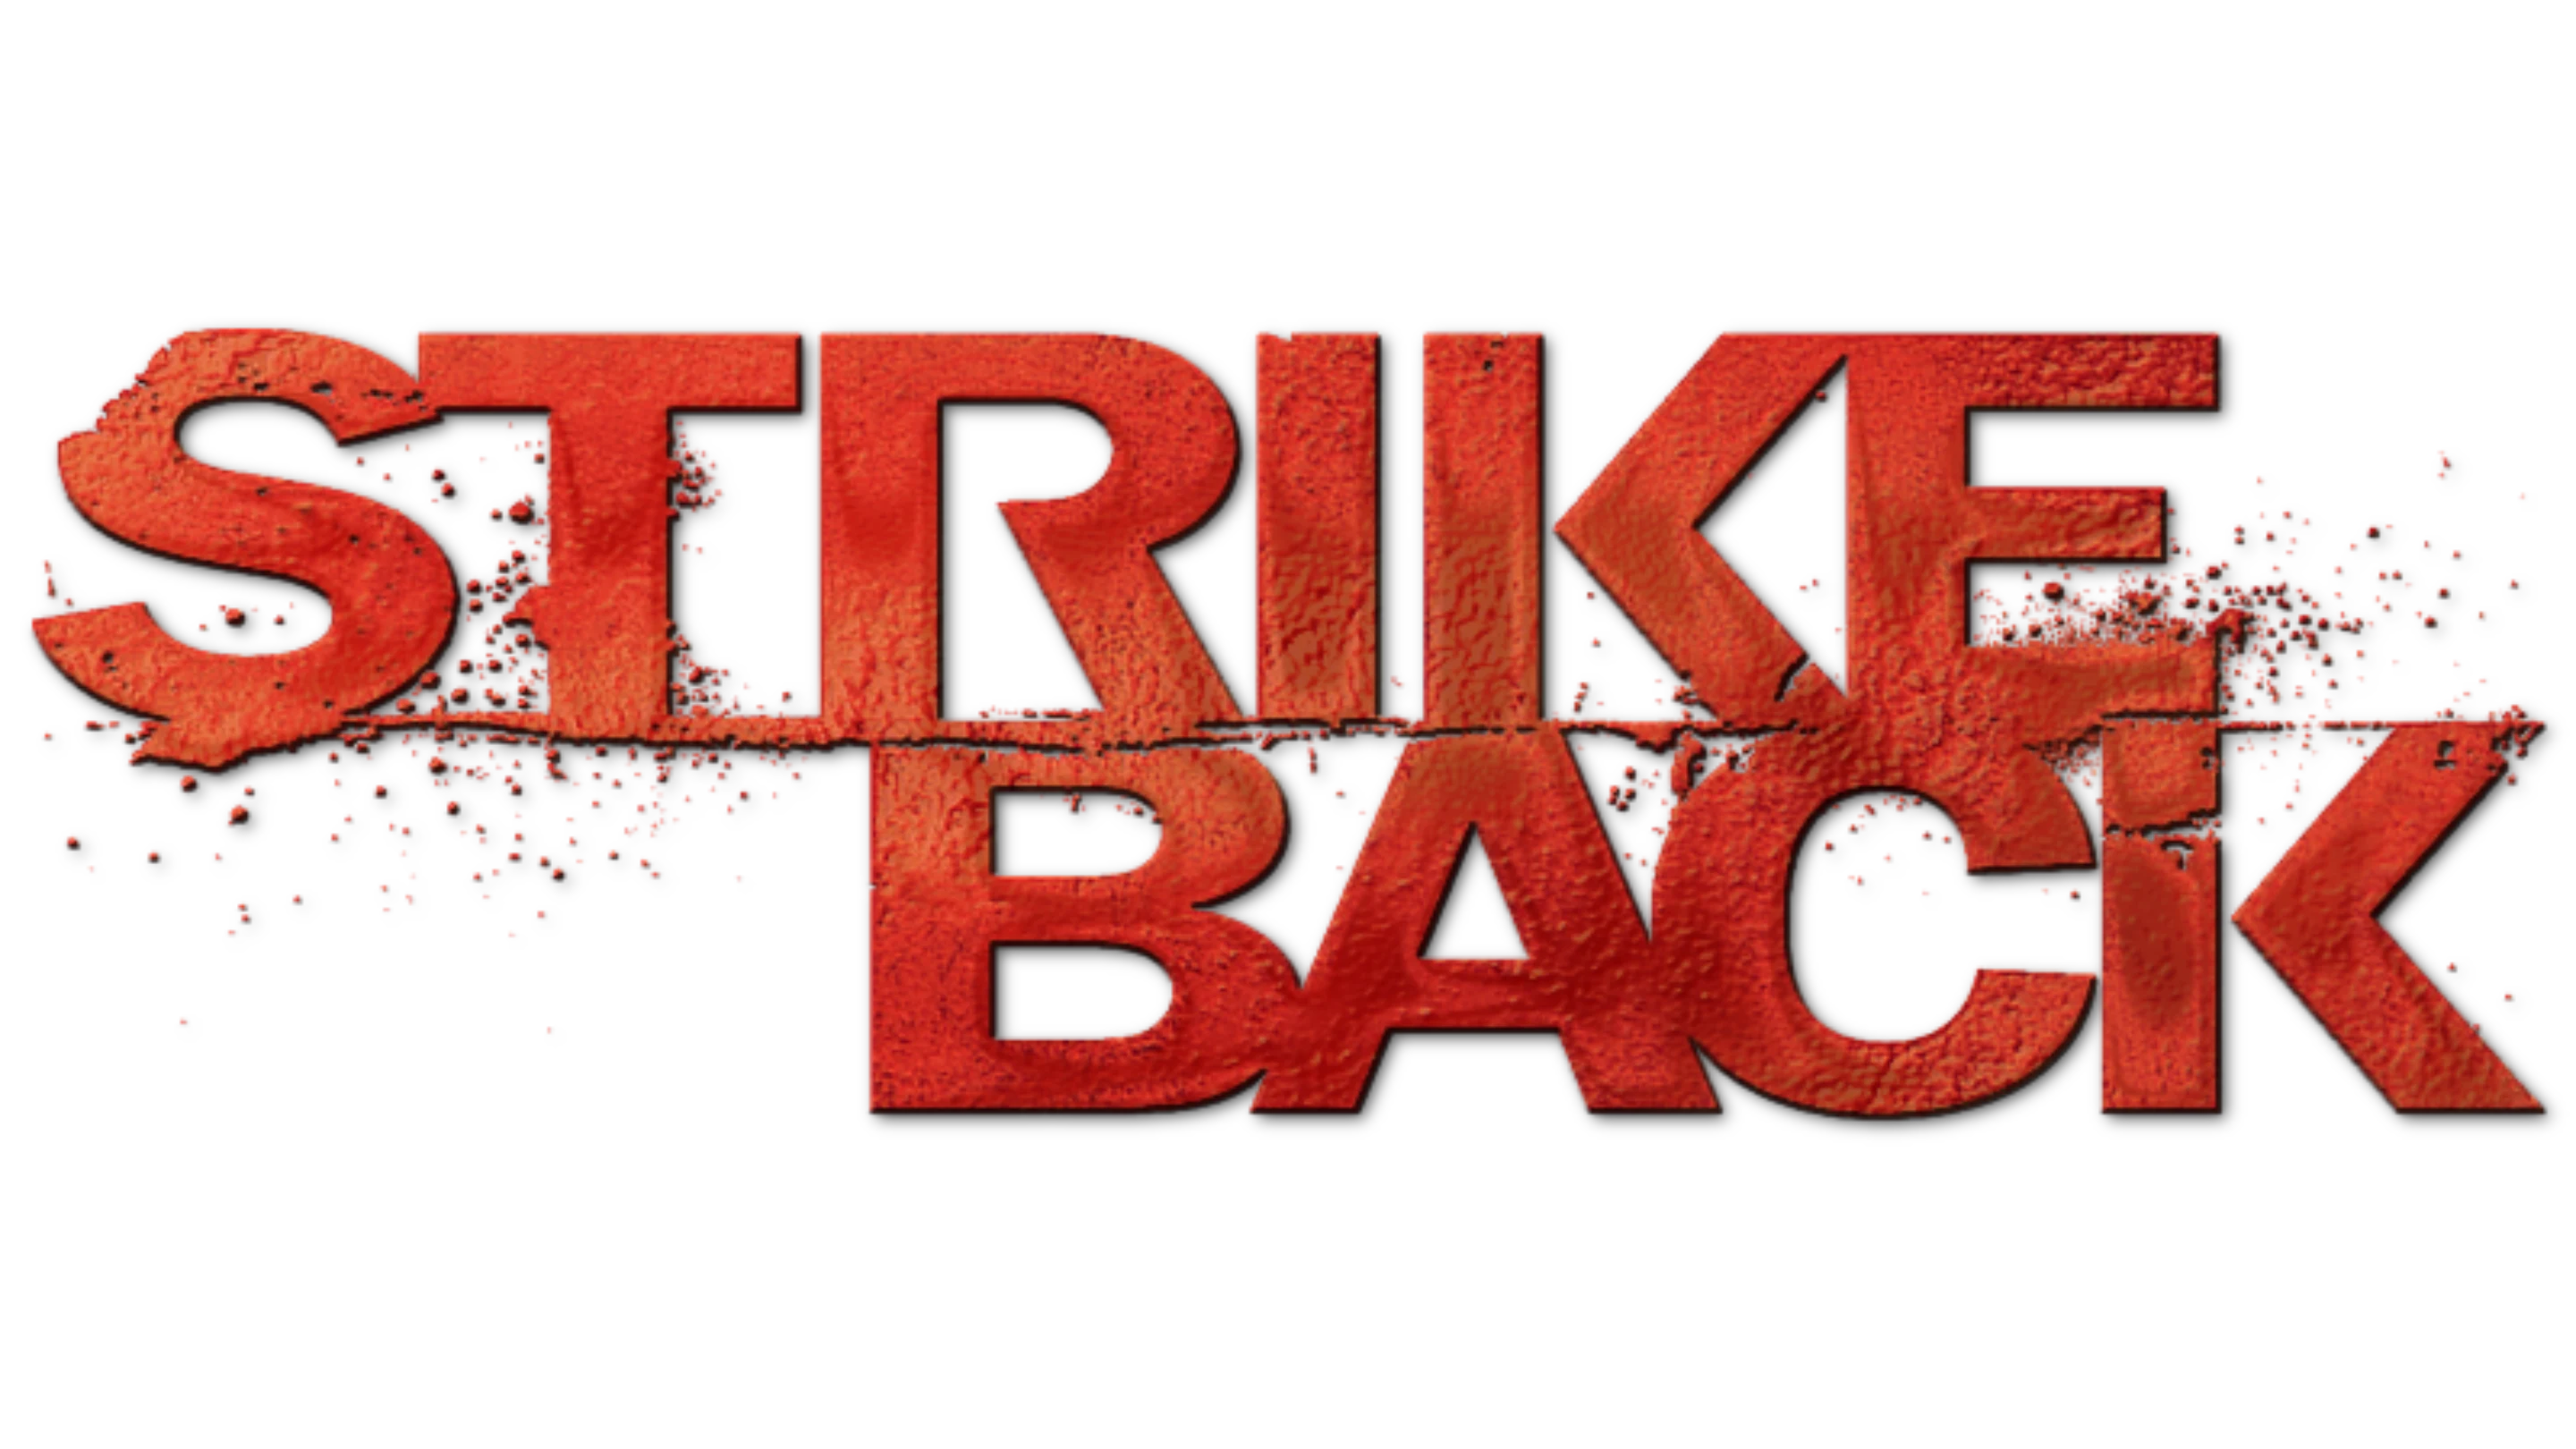 Strike Back